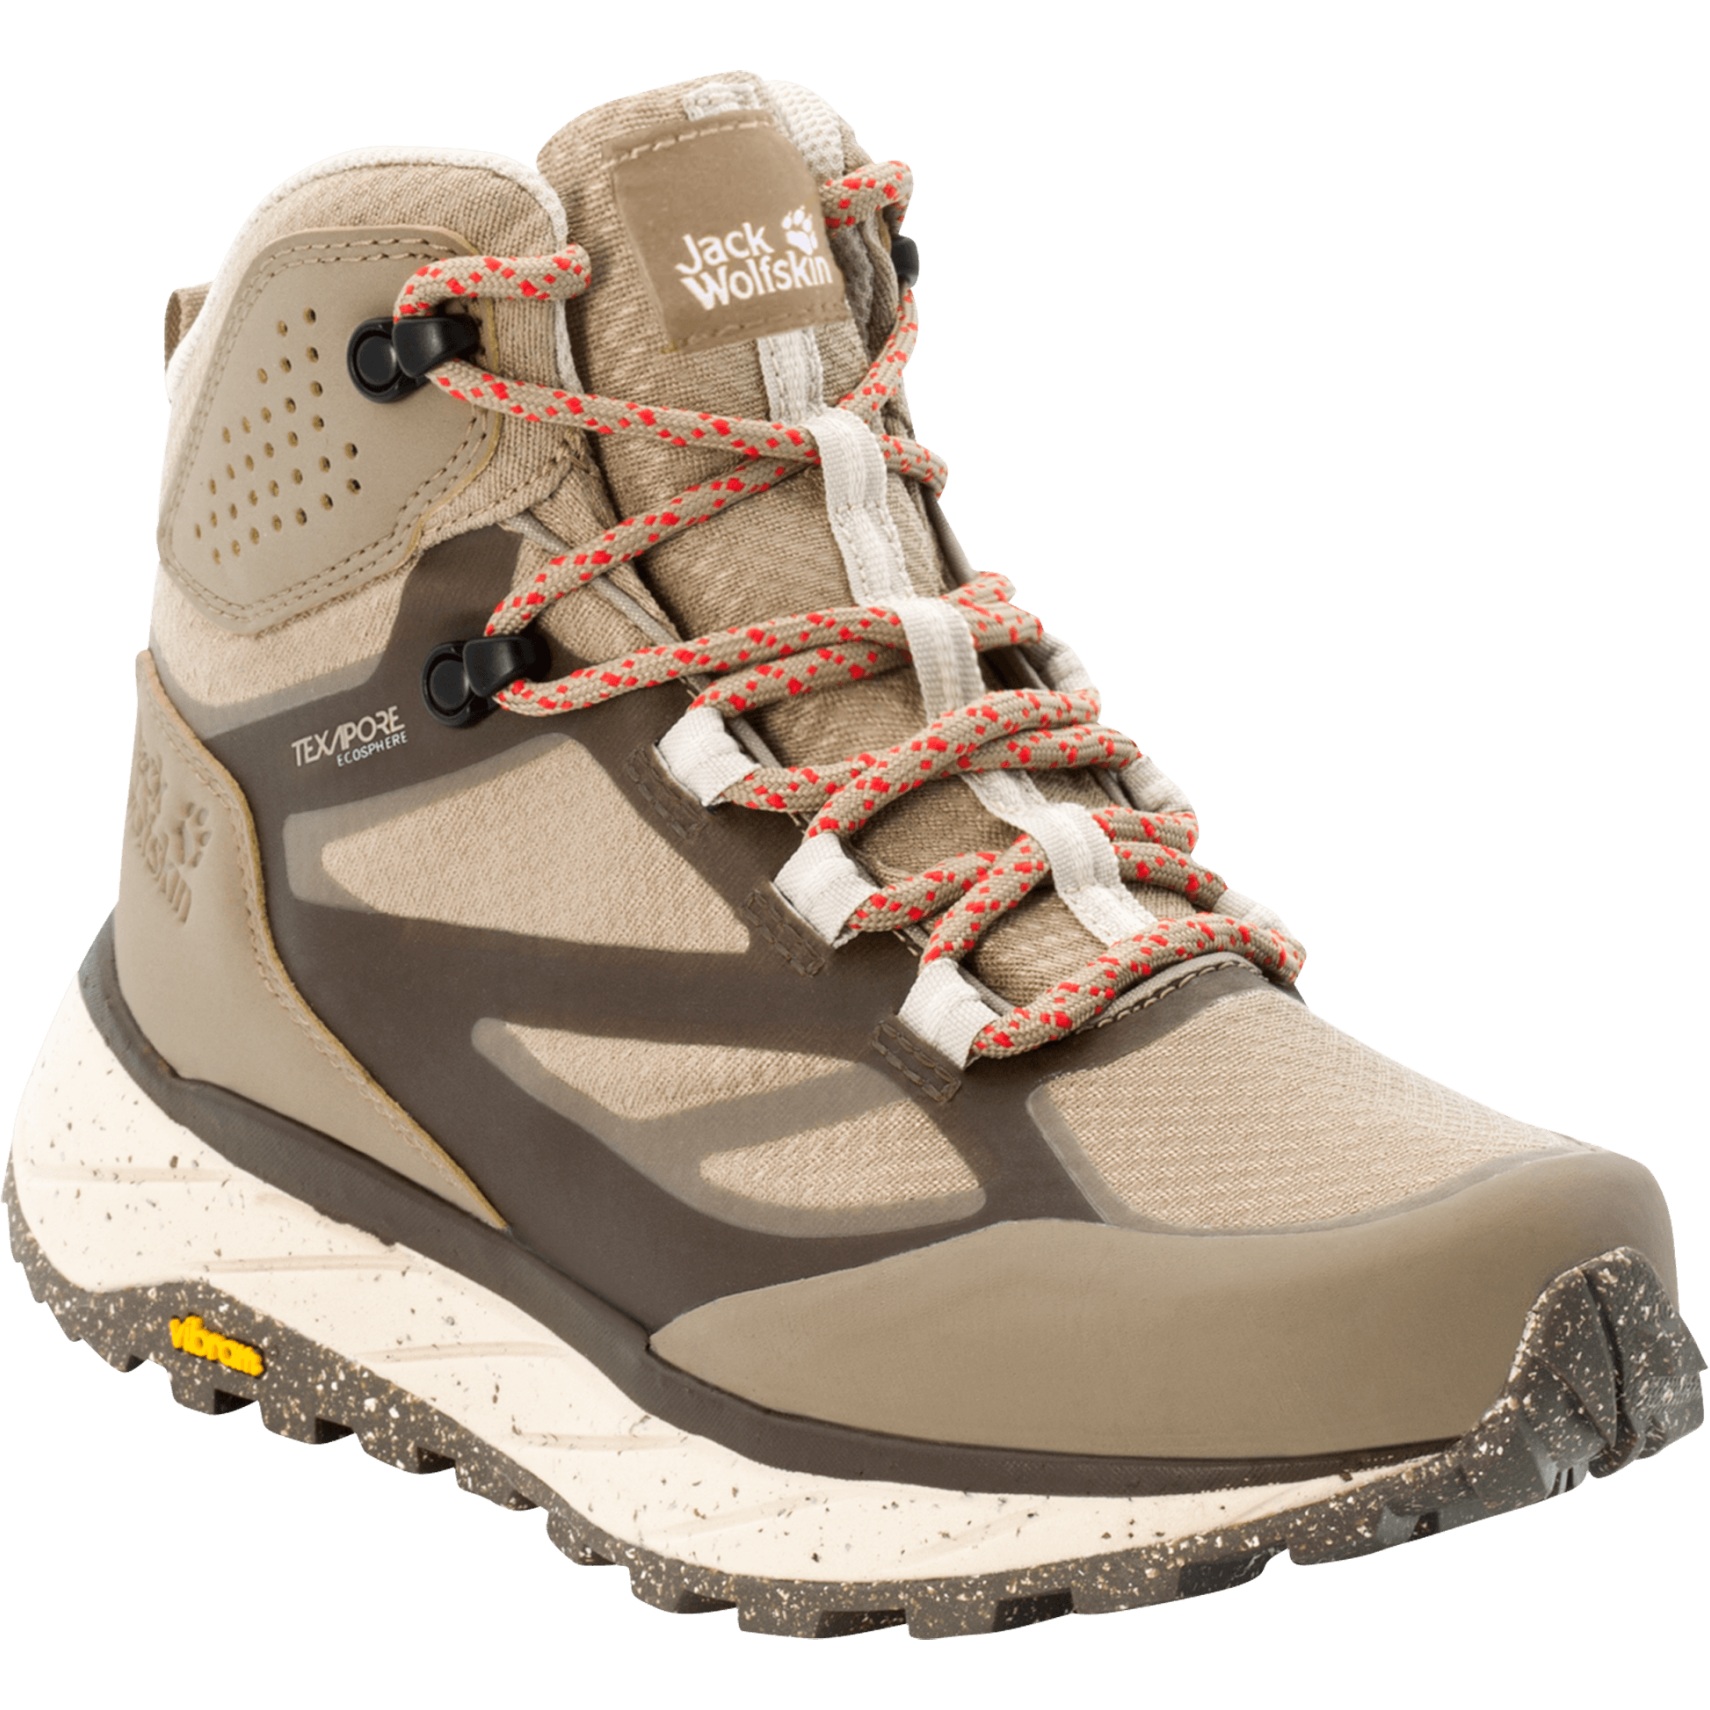 Image of Jack Wolfskin Terraventure Texapore Mid Hiking Boots Women - beige / light beige